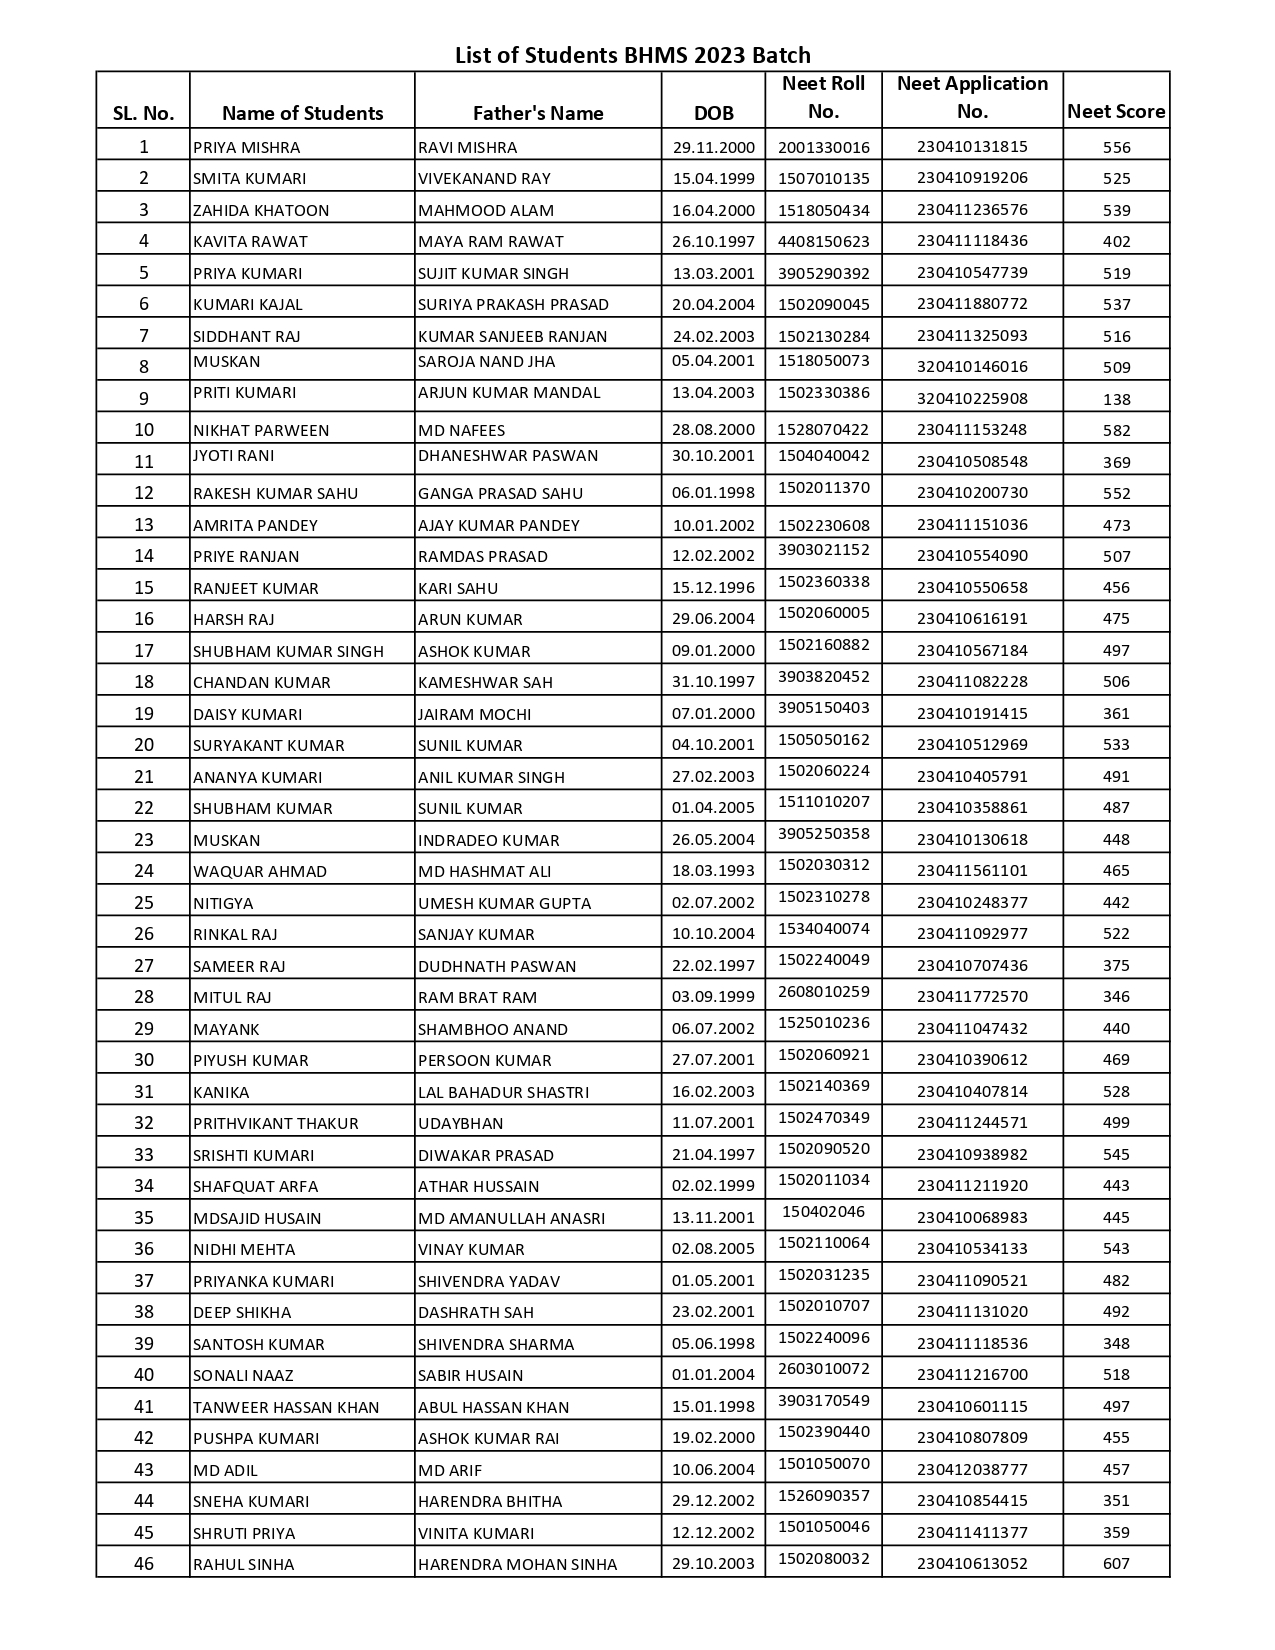 List of Students BHMS Batch - 2023